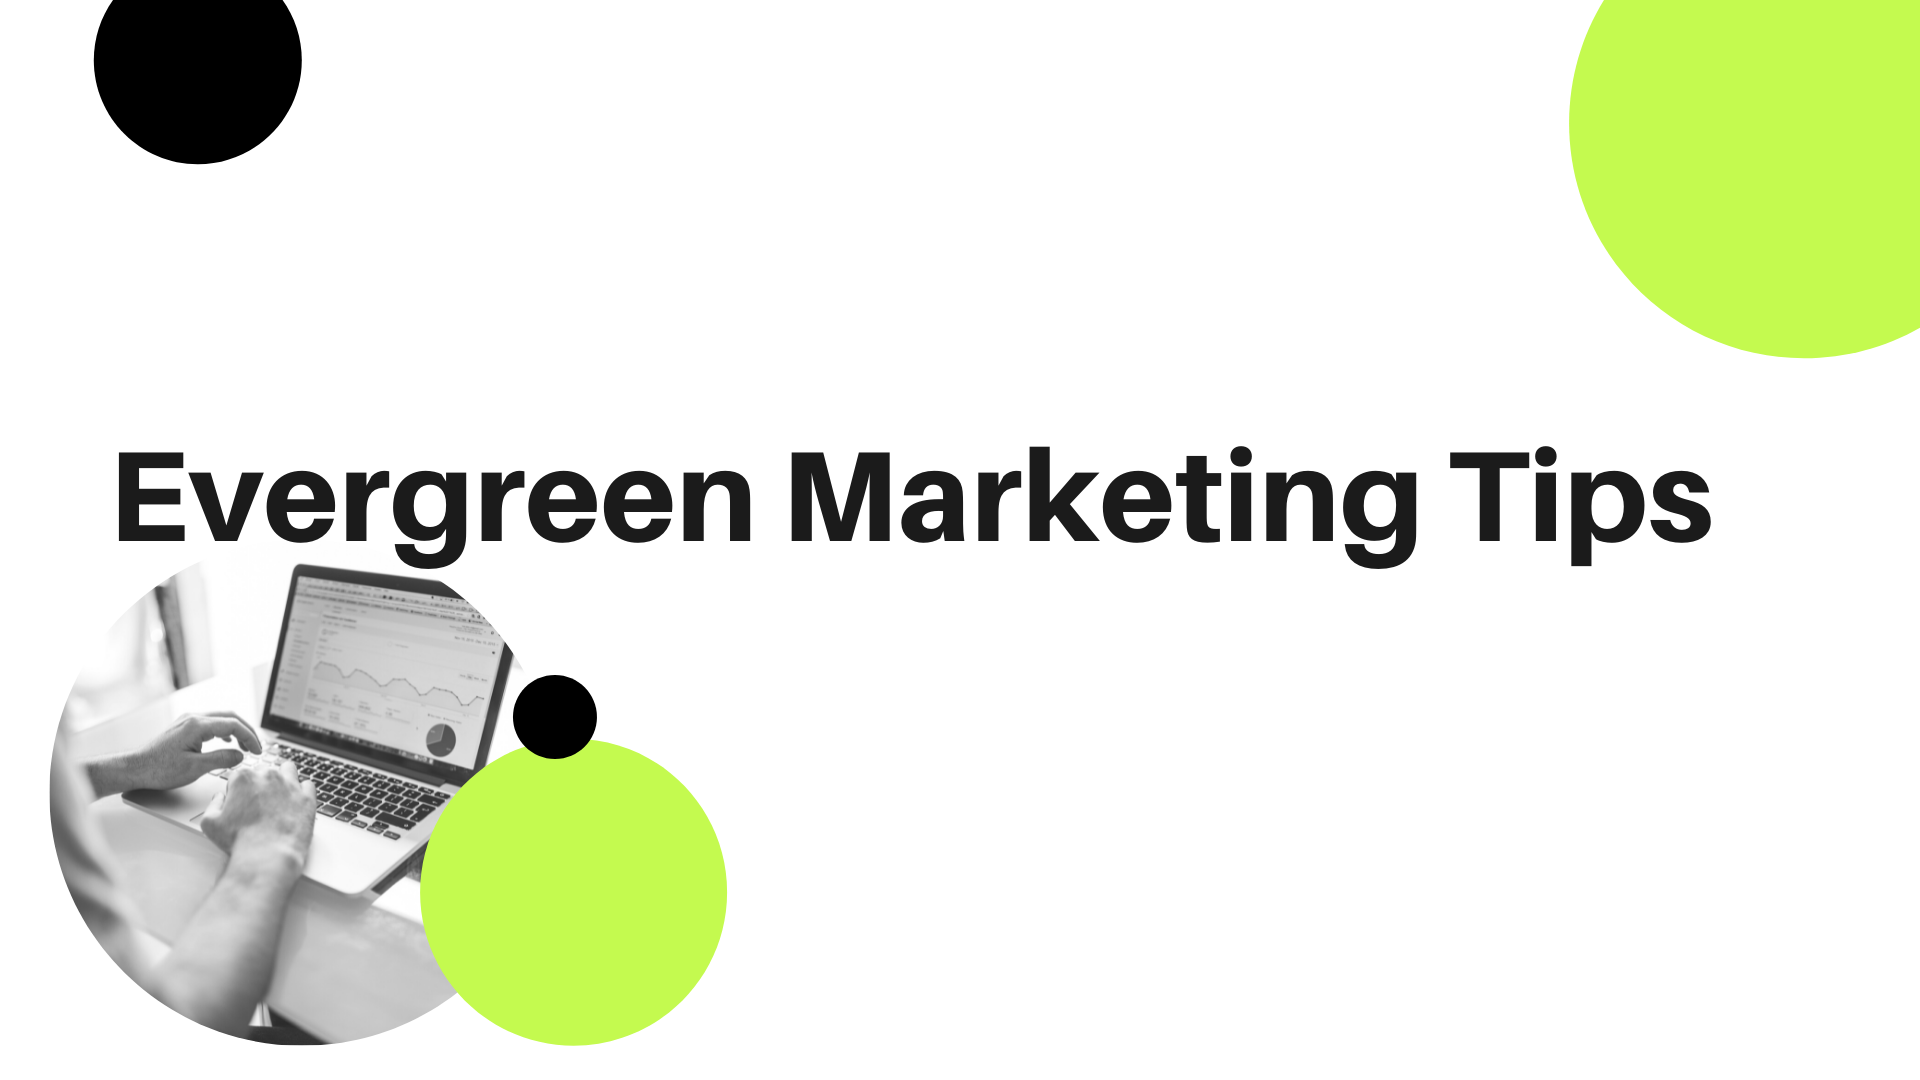 Evergreen marketing tips